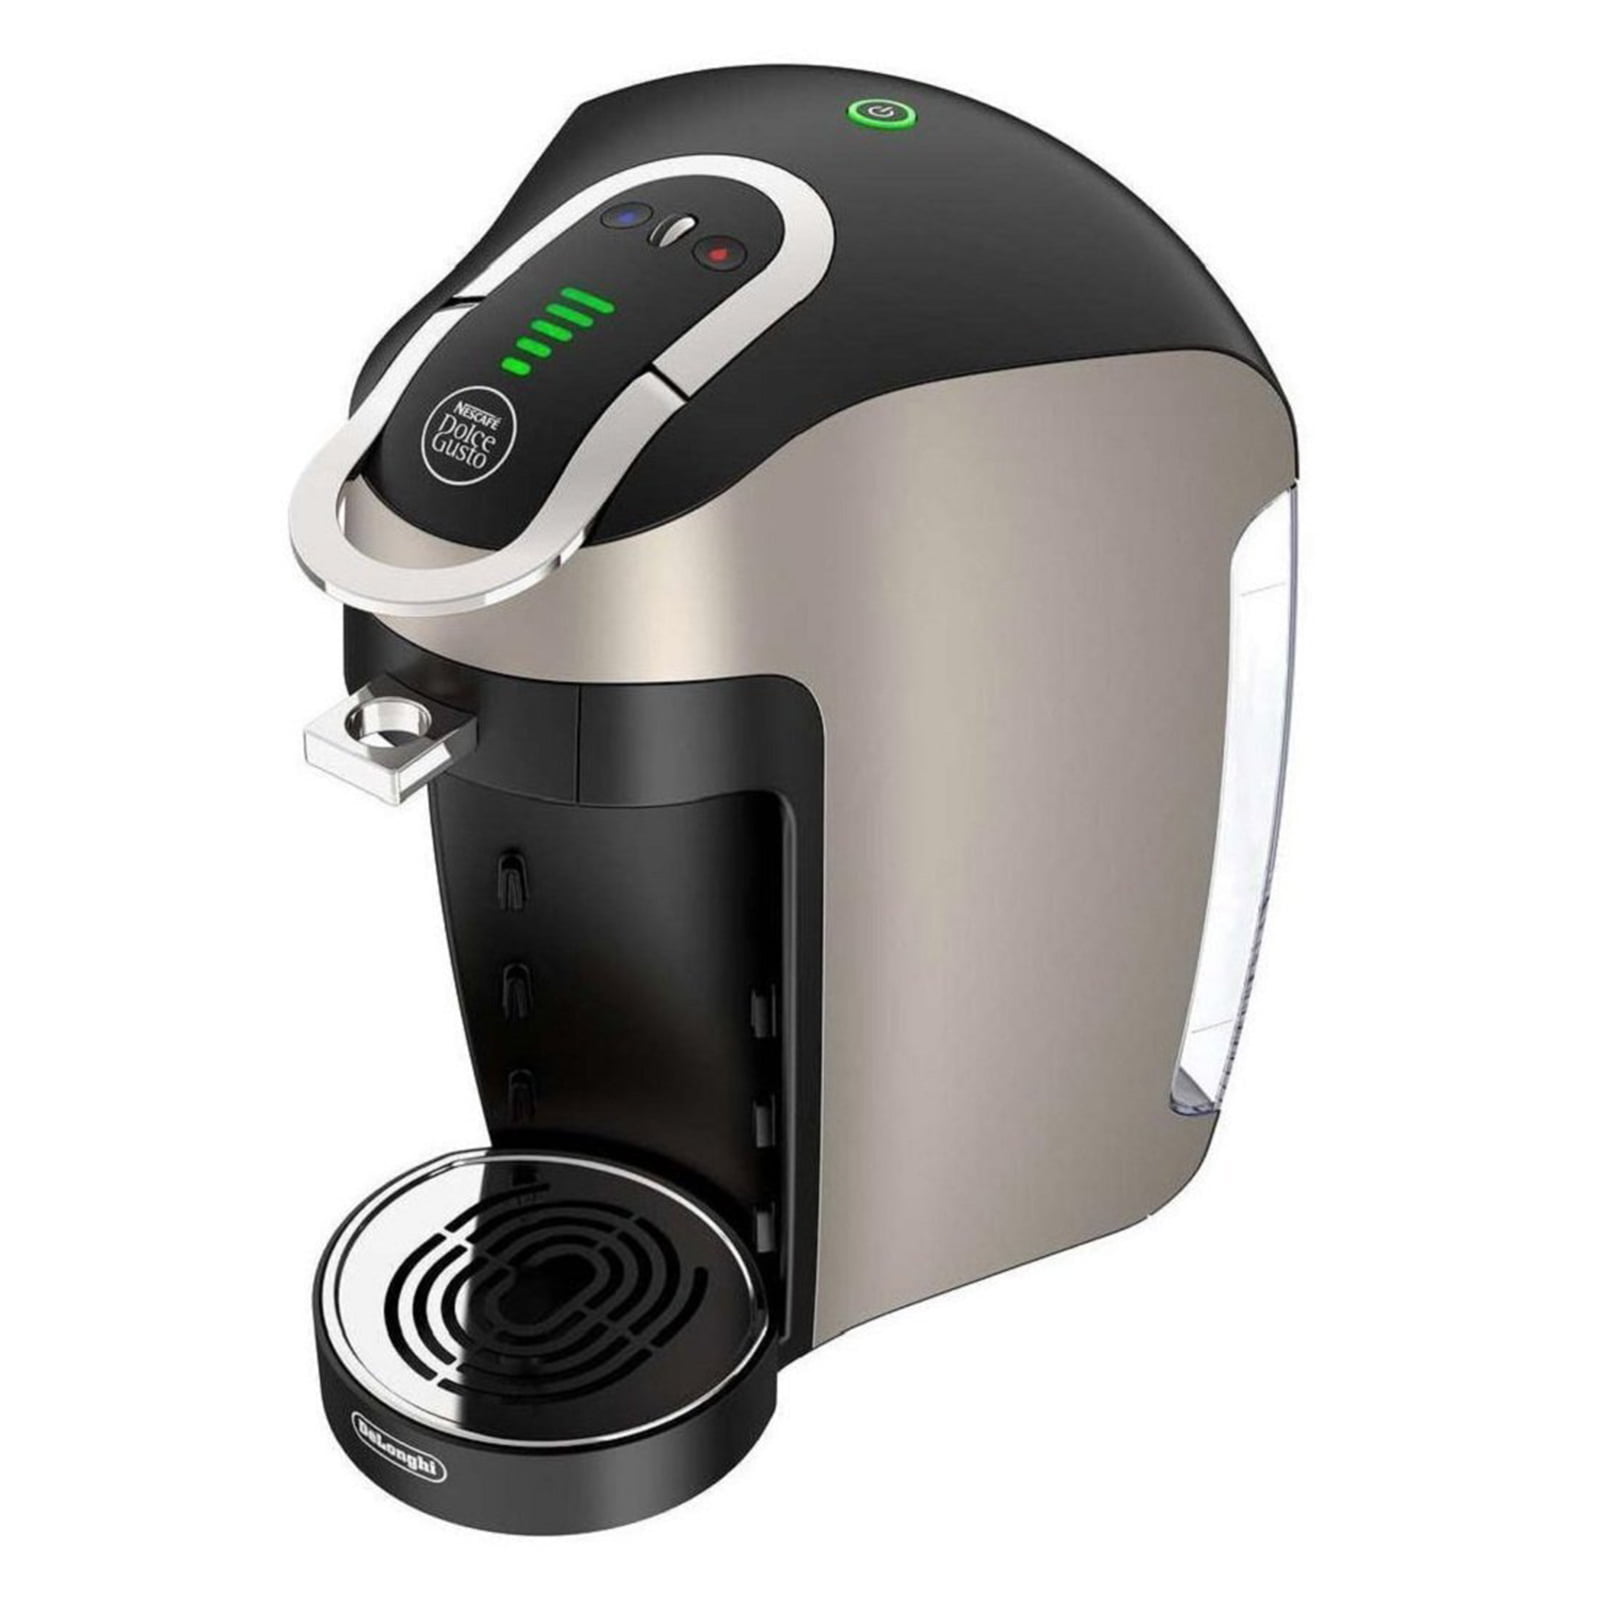 Get Nestle 3 Options Coffee Tea Vending Machine at Perfect Price